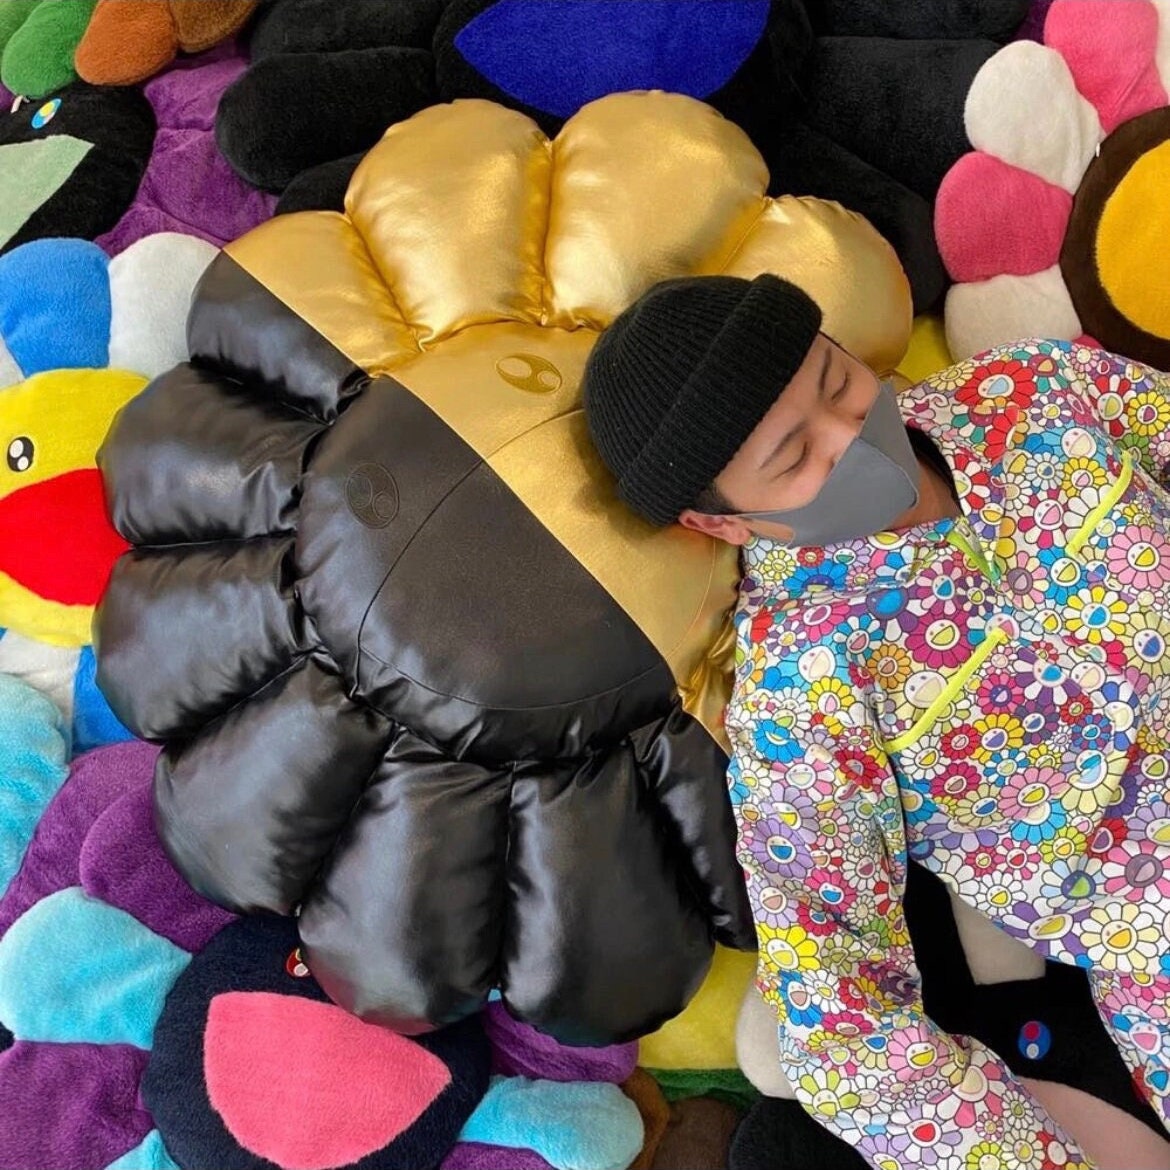 Takashi Murakami's Pillows - For Sale on Artsy